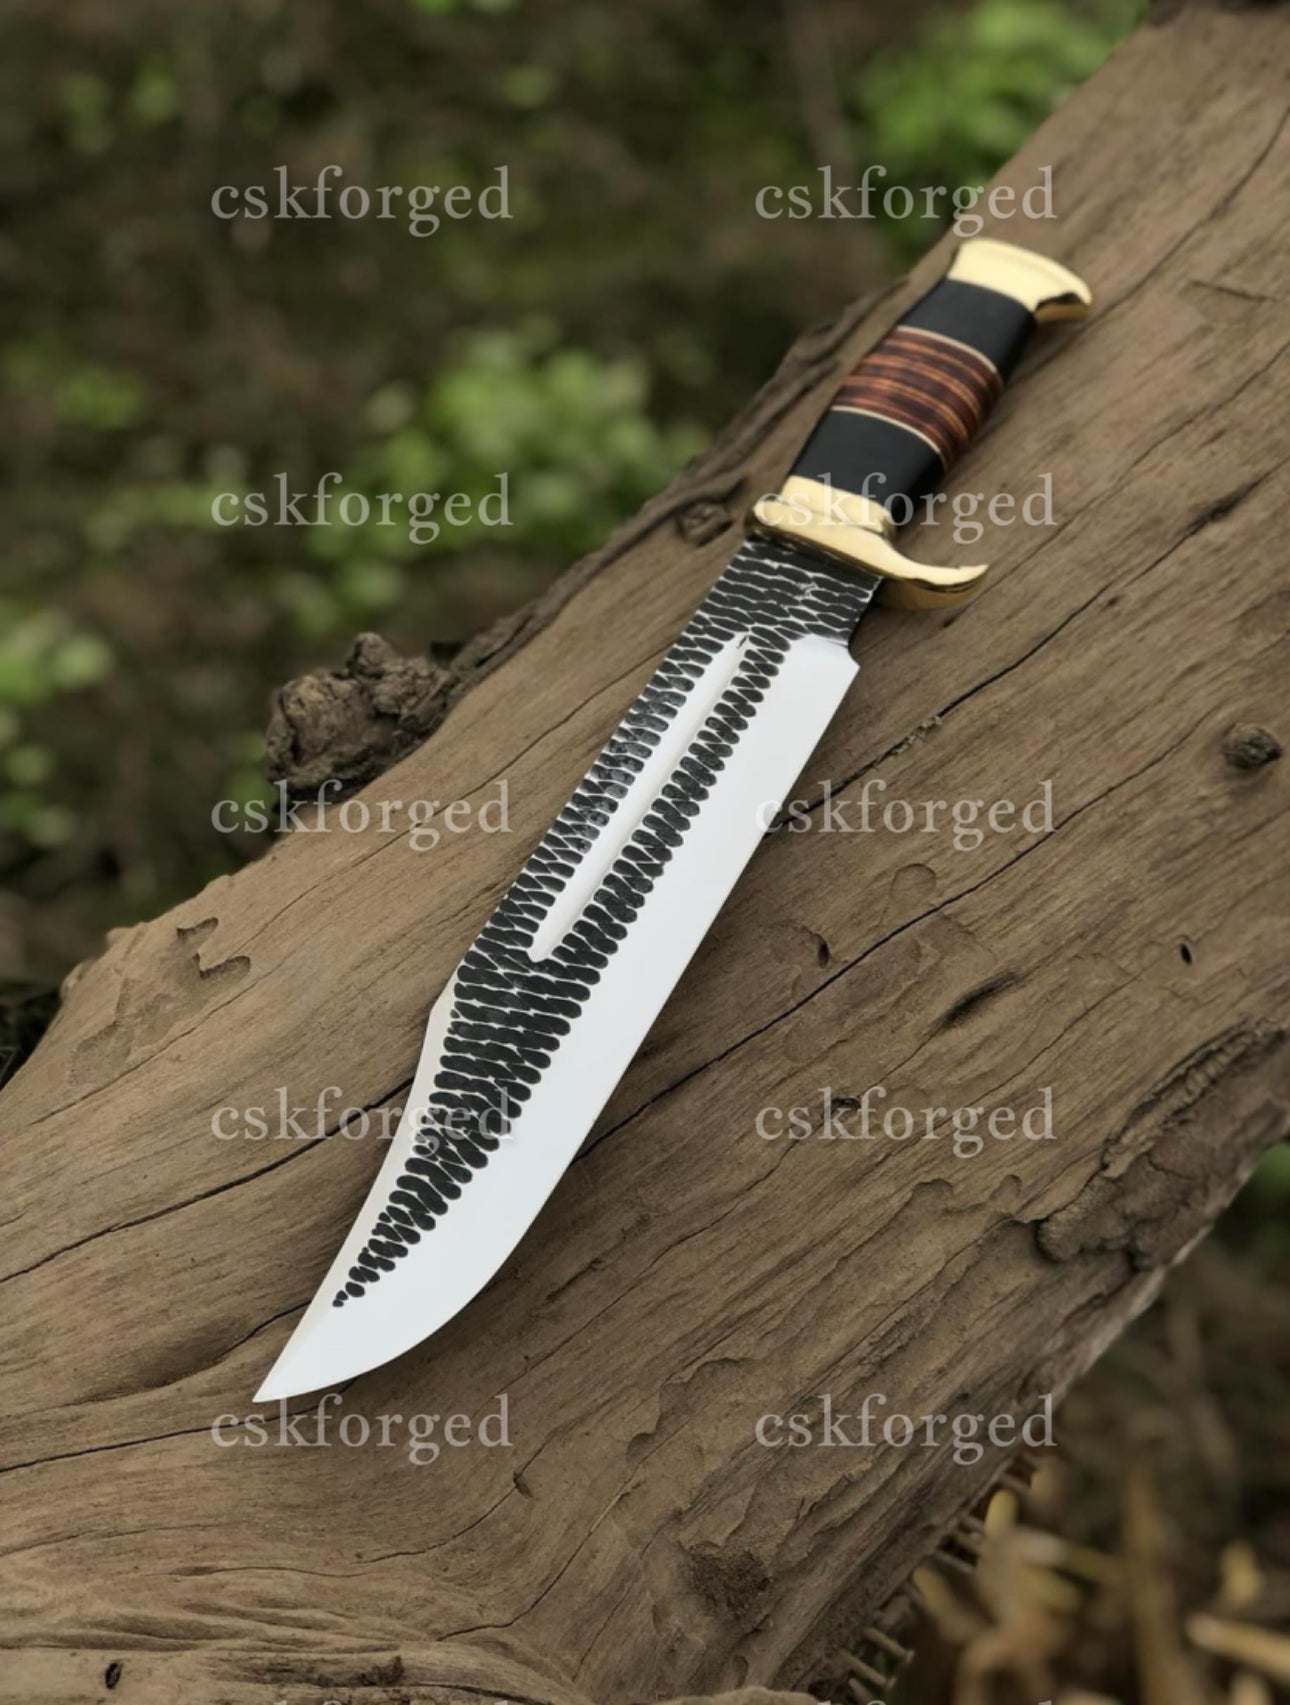 New Look of Custom Handmade Crocodile Dundee Bowie knife| cskforged